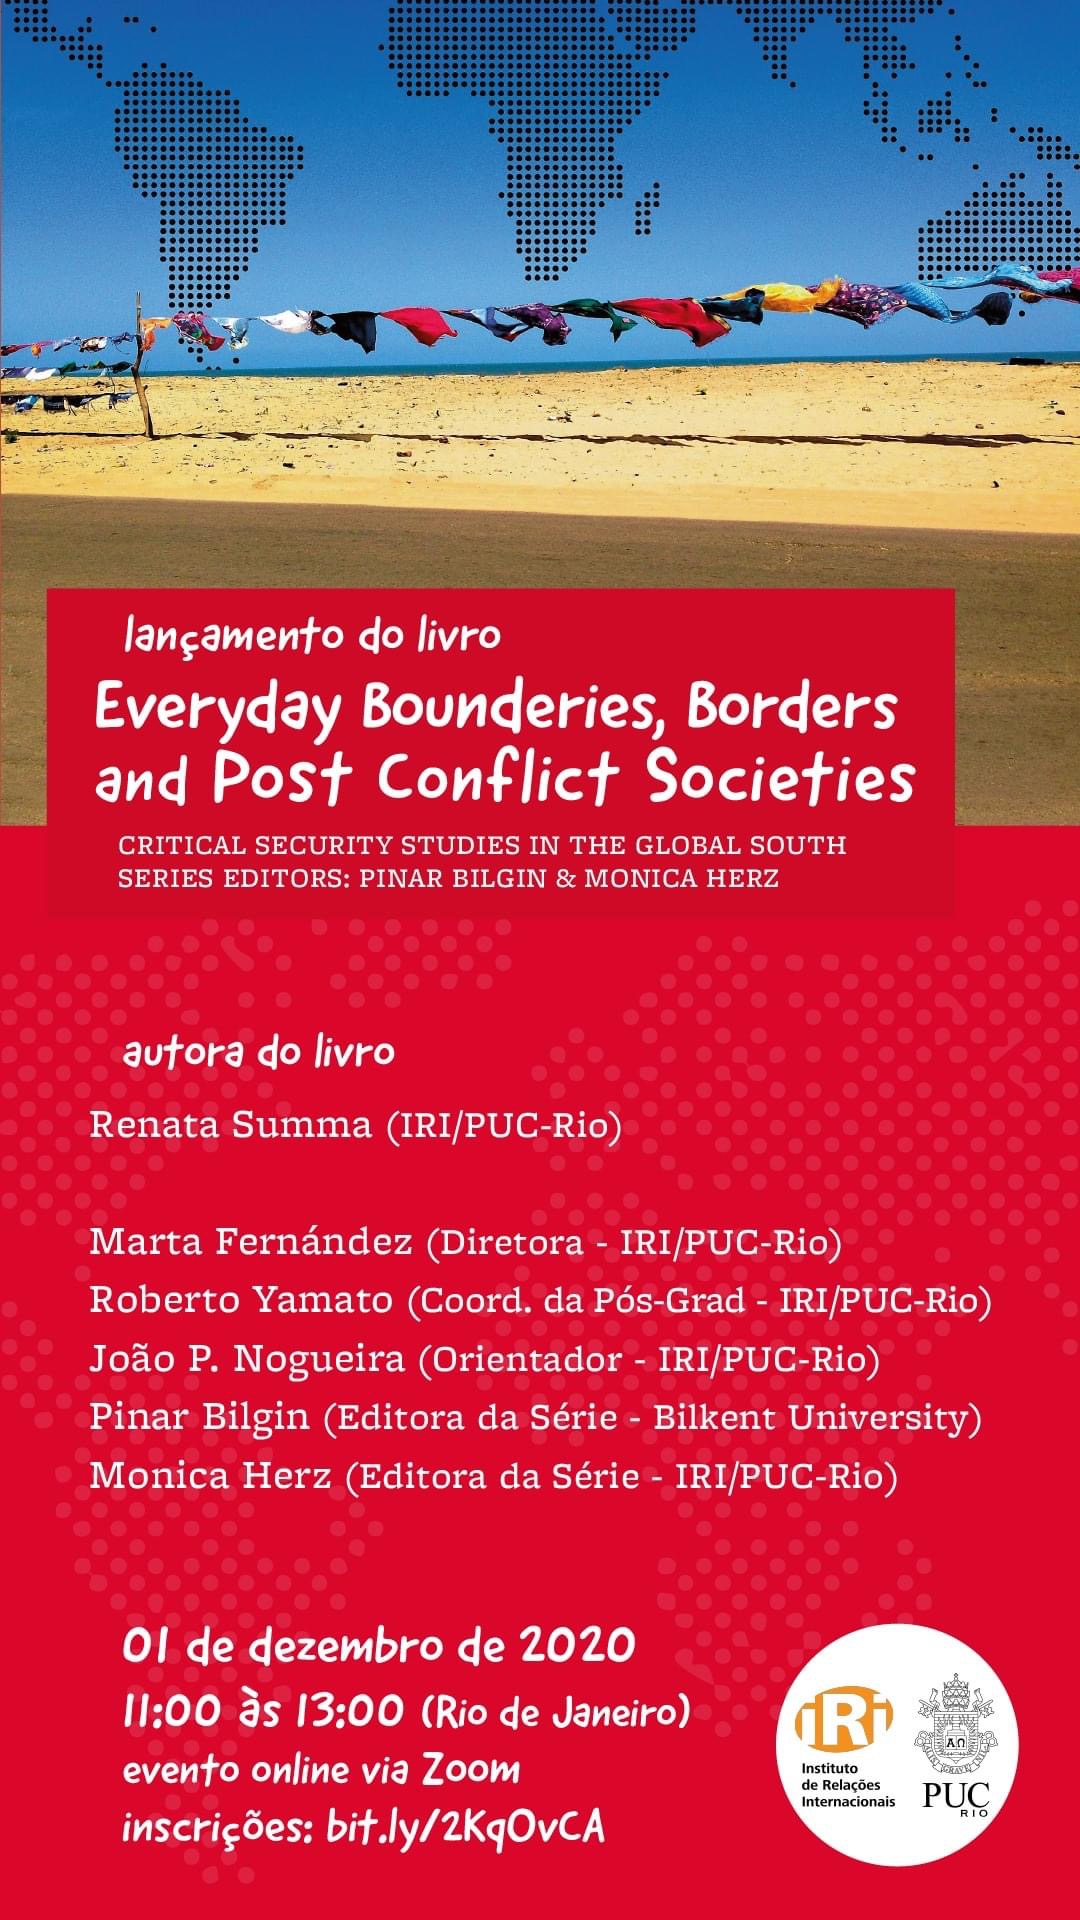 Lançamento do livro “Everyday Boundaries, Borders and Post Conflict Societies”